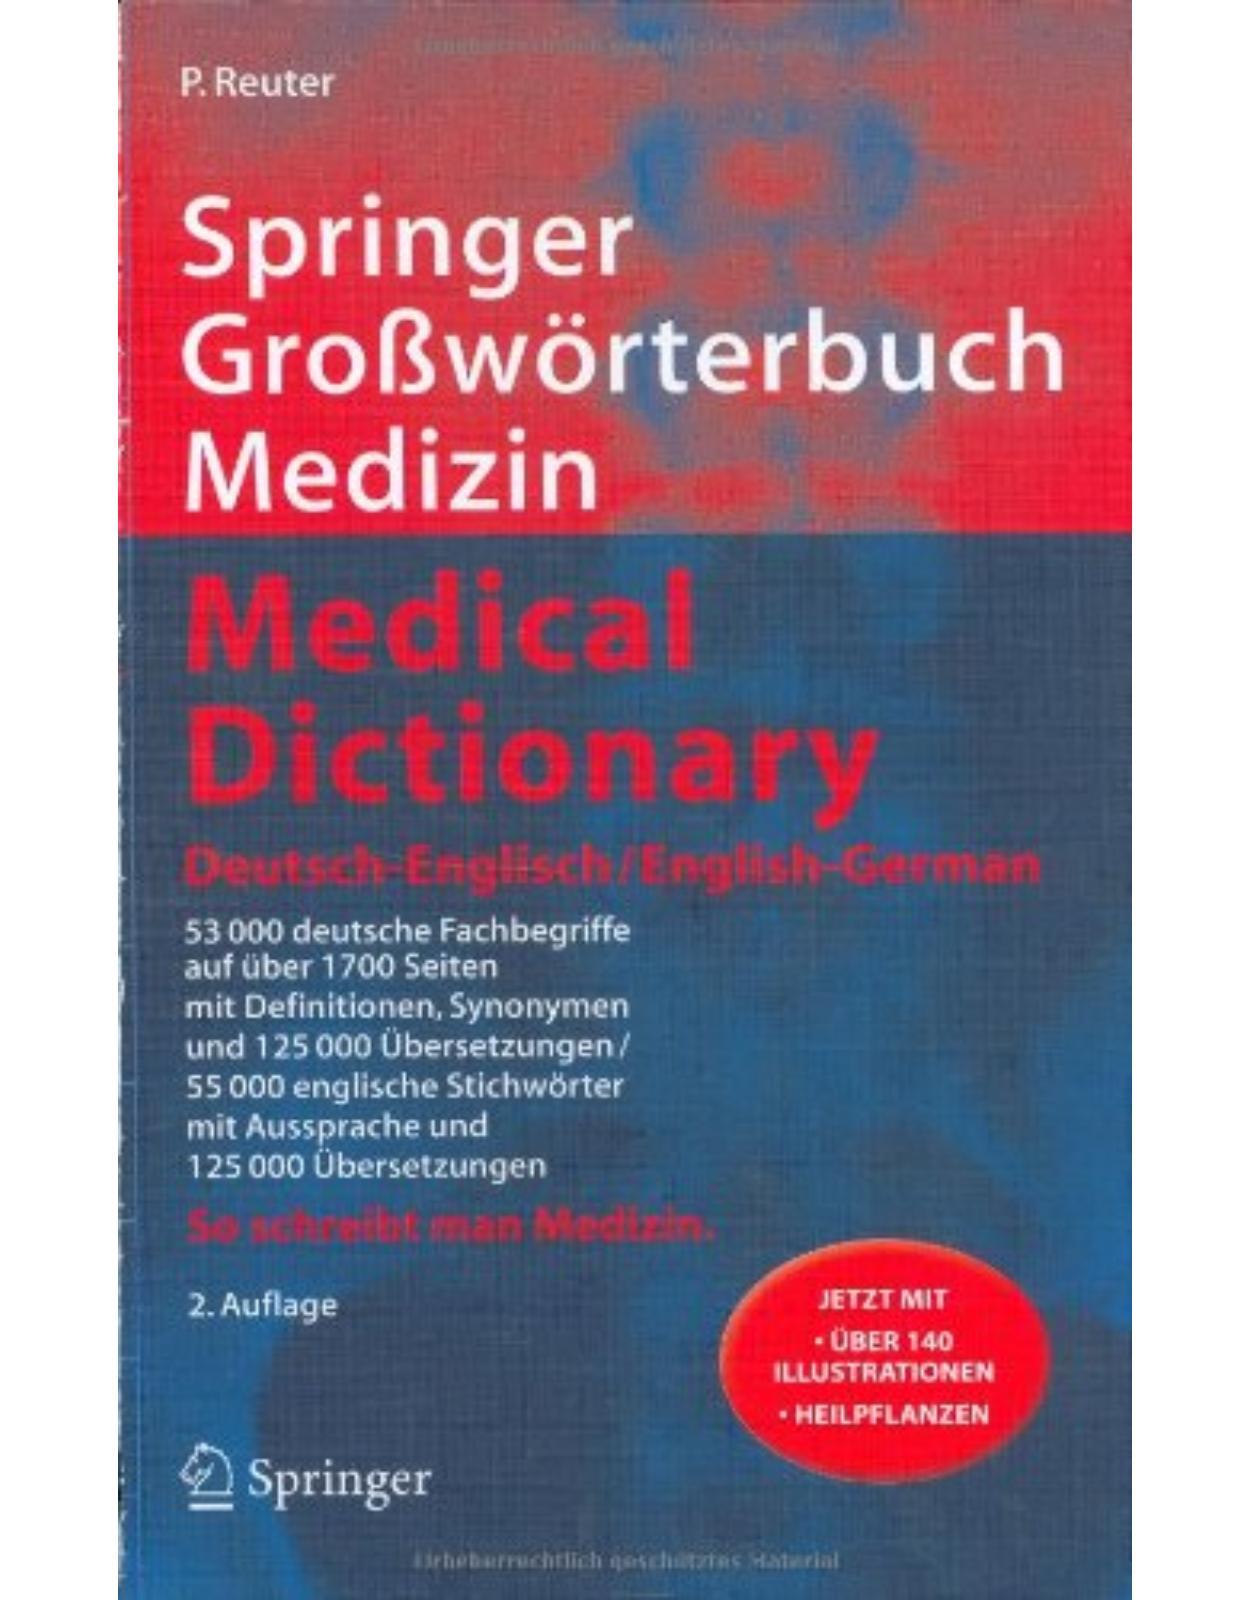 Medical Dictionary Deutsch-Englisch / English-German